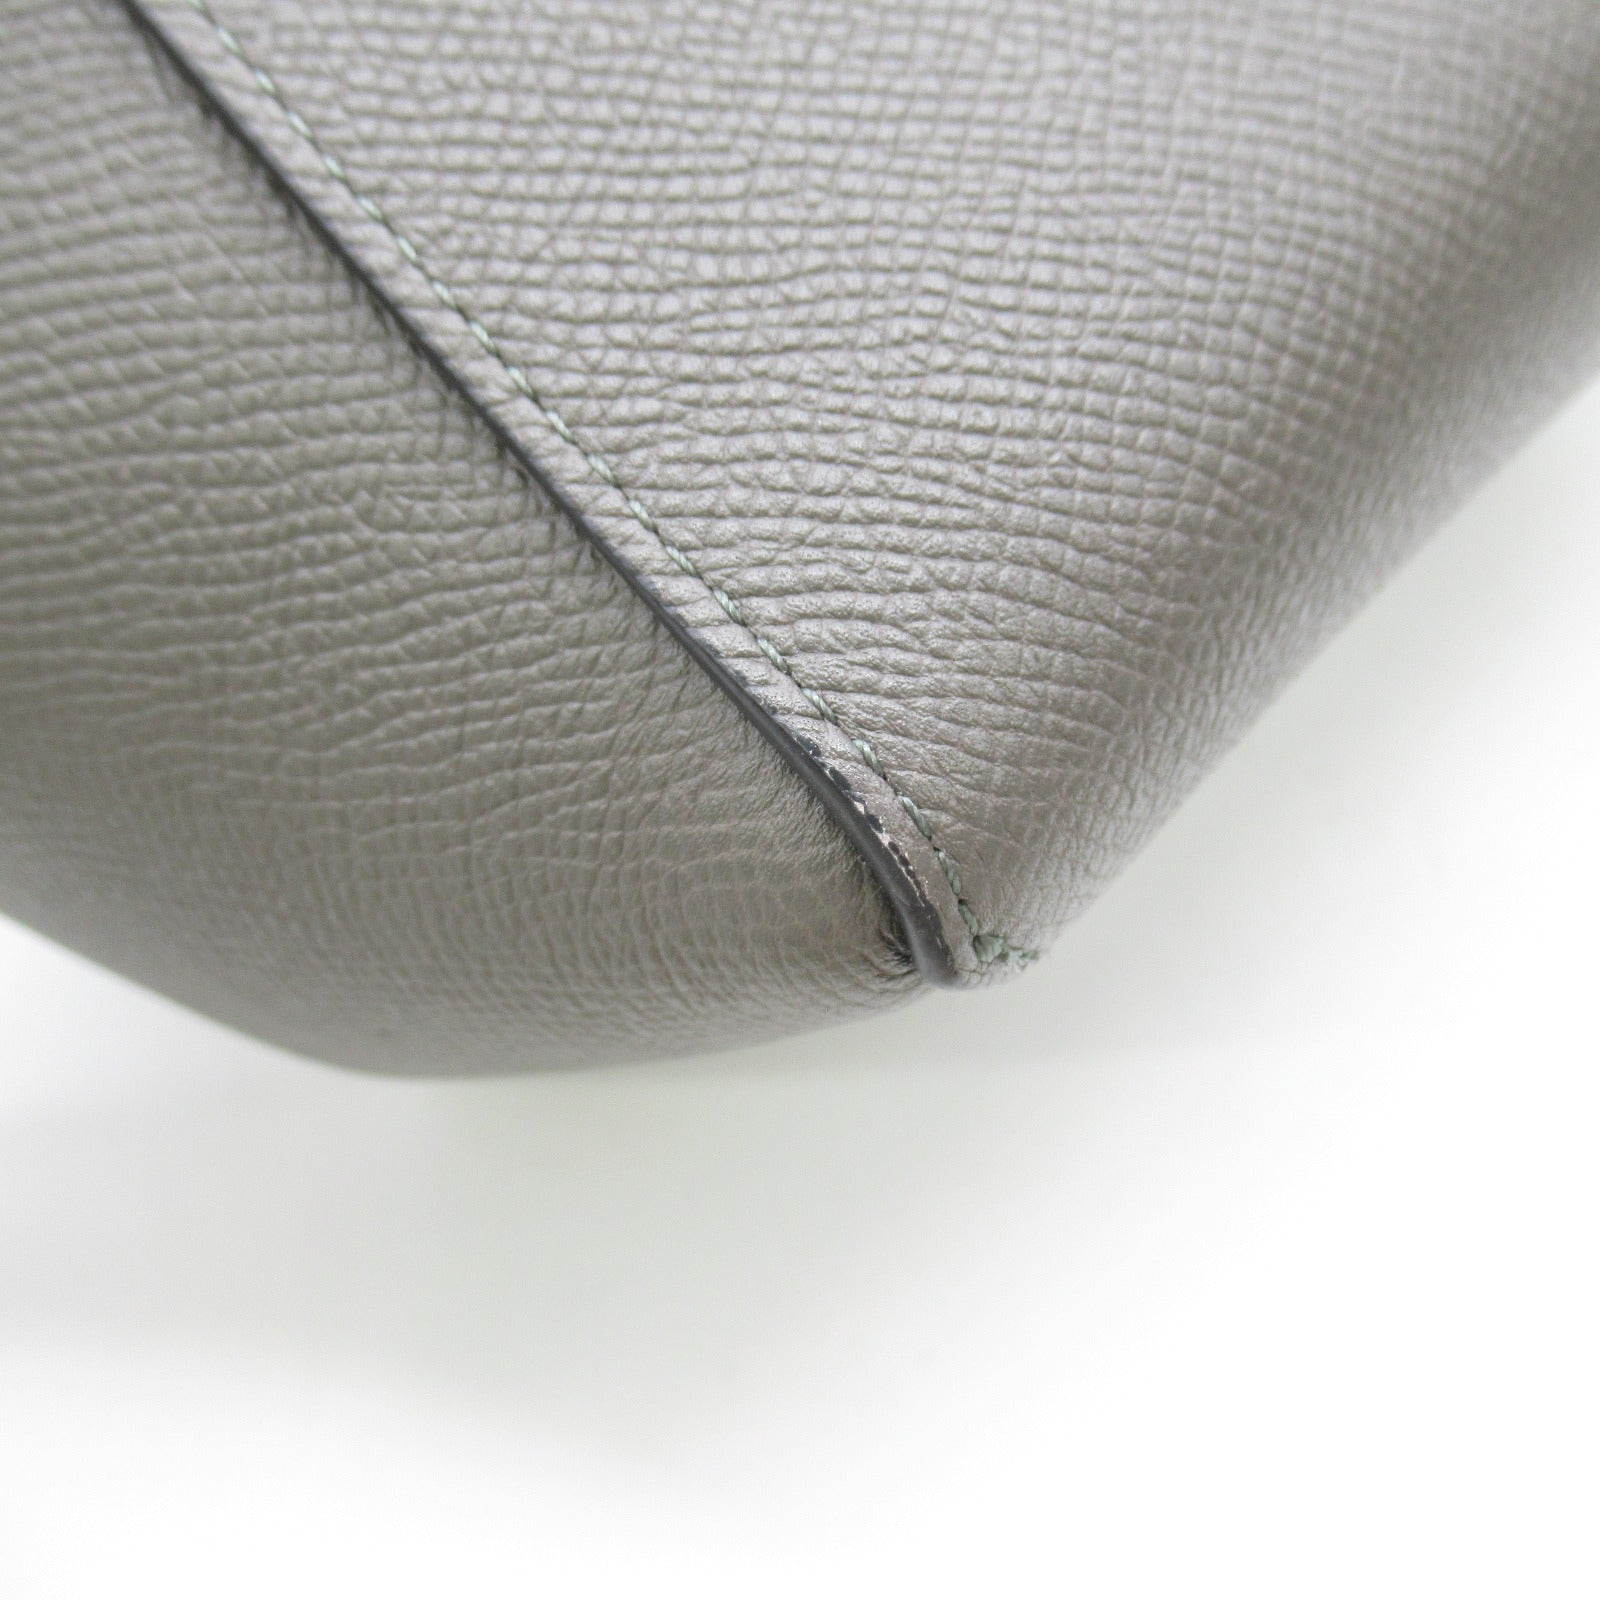 Celine Celline Belt Bag Micro Shoulder Bag  Women&#39;s Grey Chakol Grey 185003ZVA